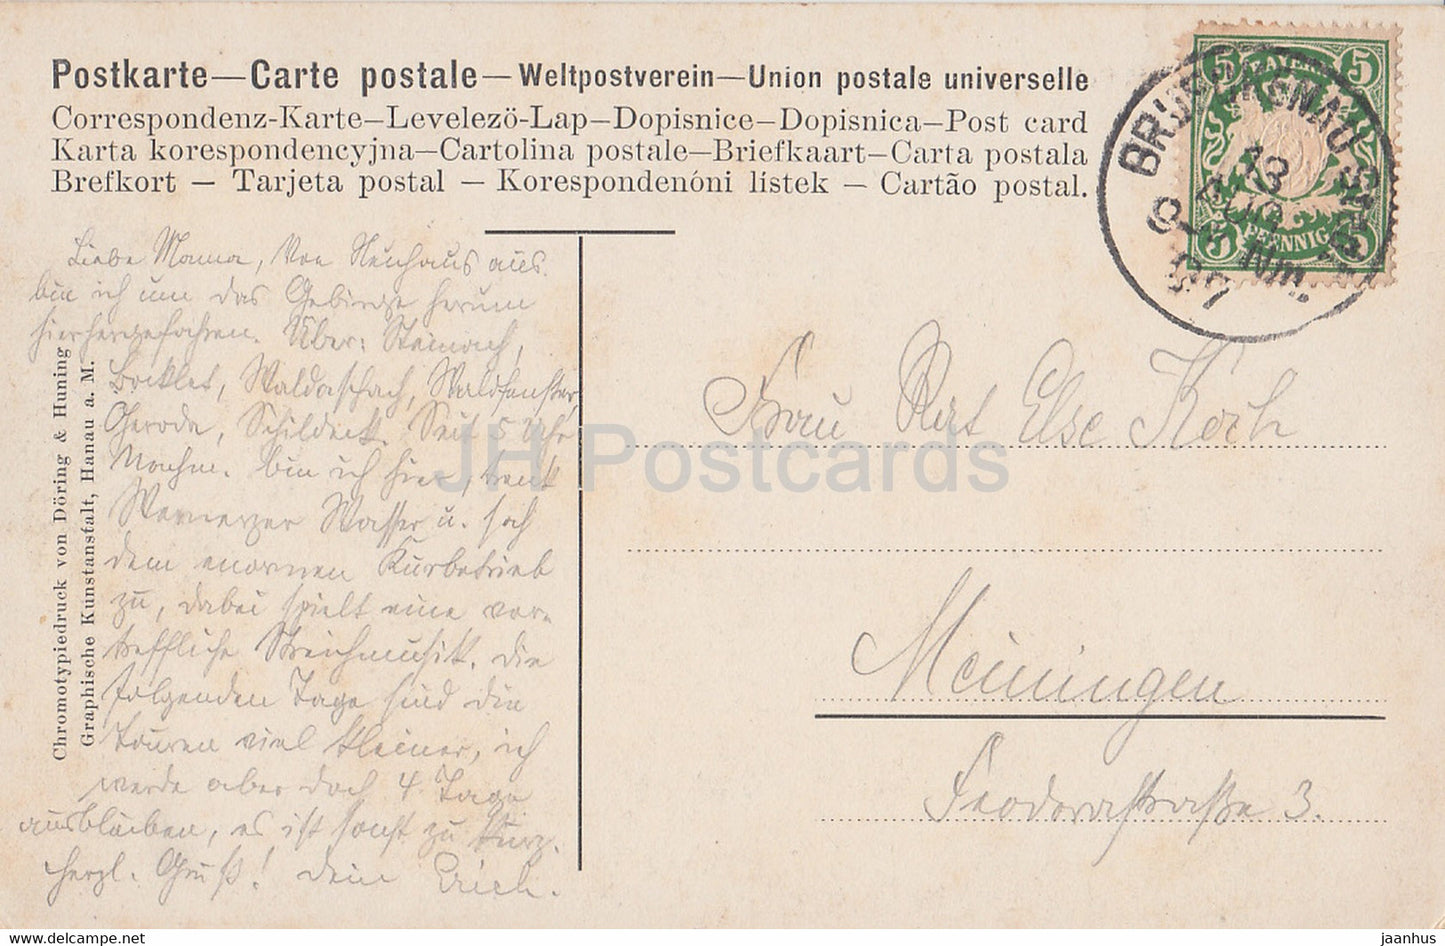 Luftkurort Bad Bruckenau 298 Meter - old postcard - 1907 - Germany - used